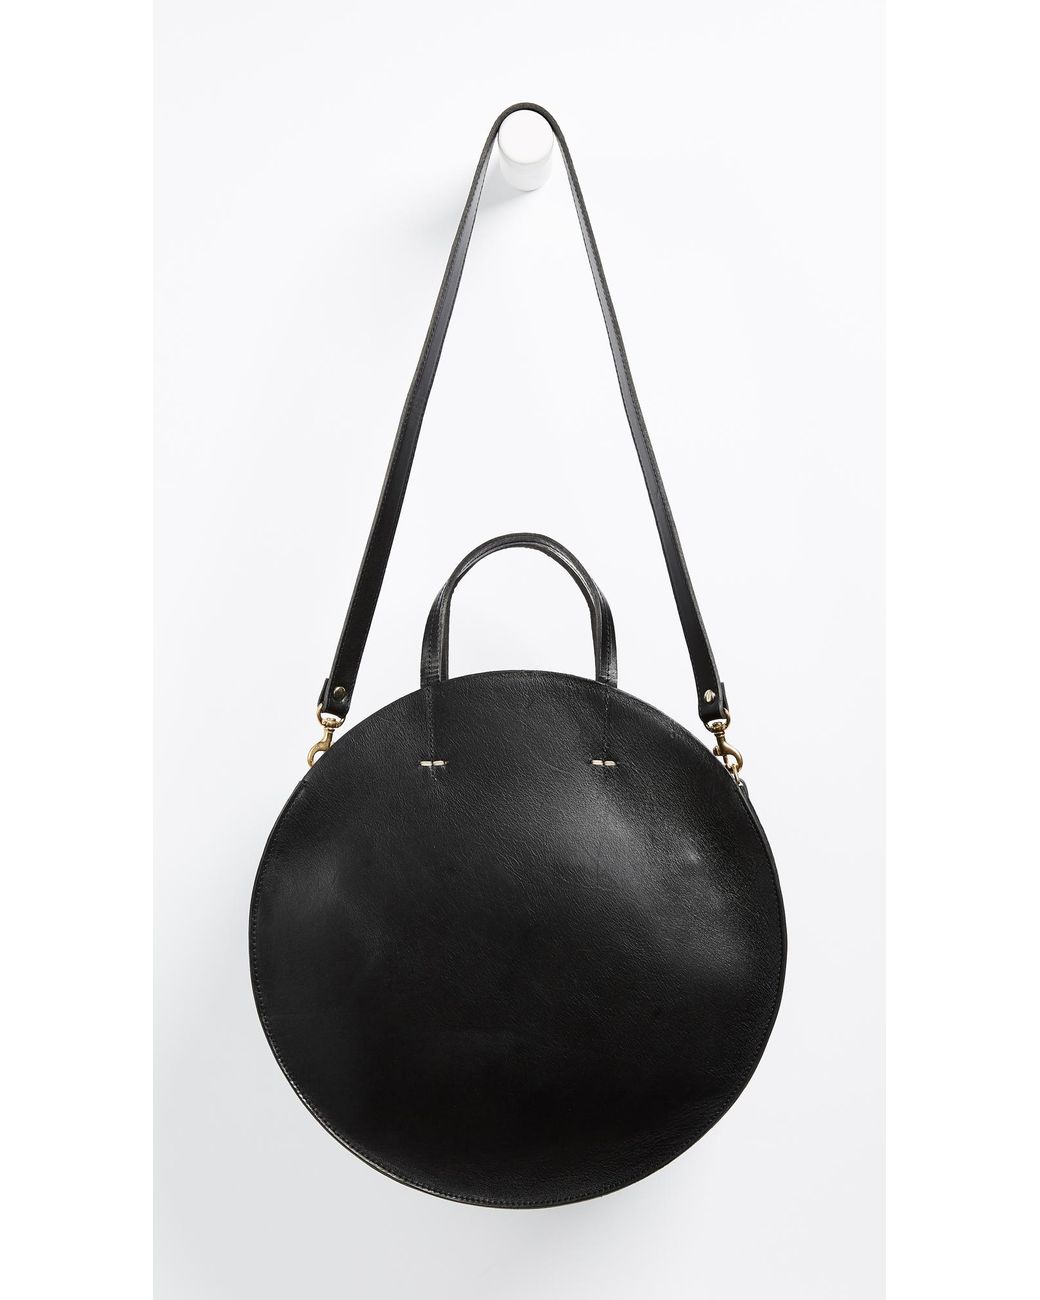 Clare V. Alistair Circle Bag in Black